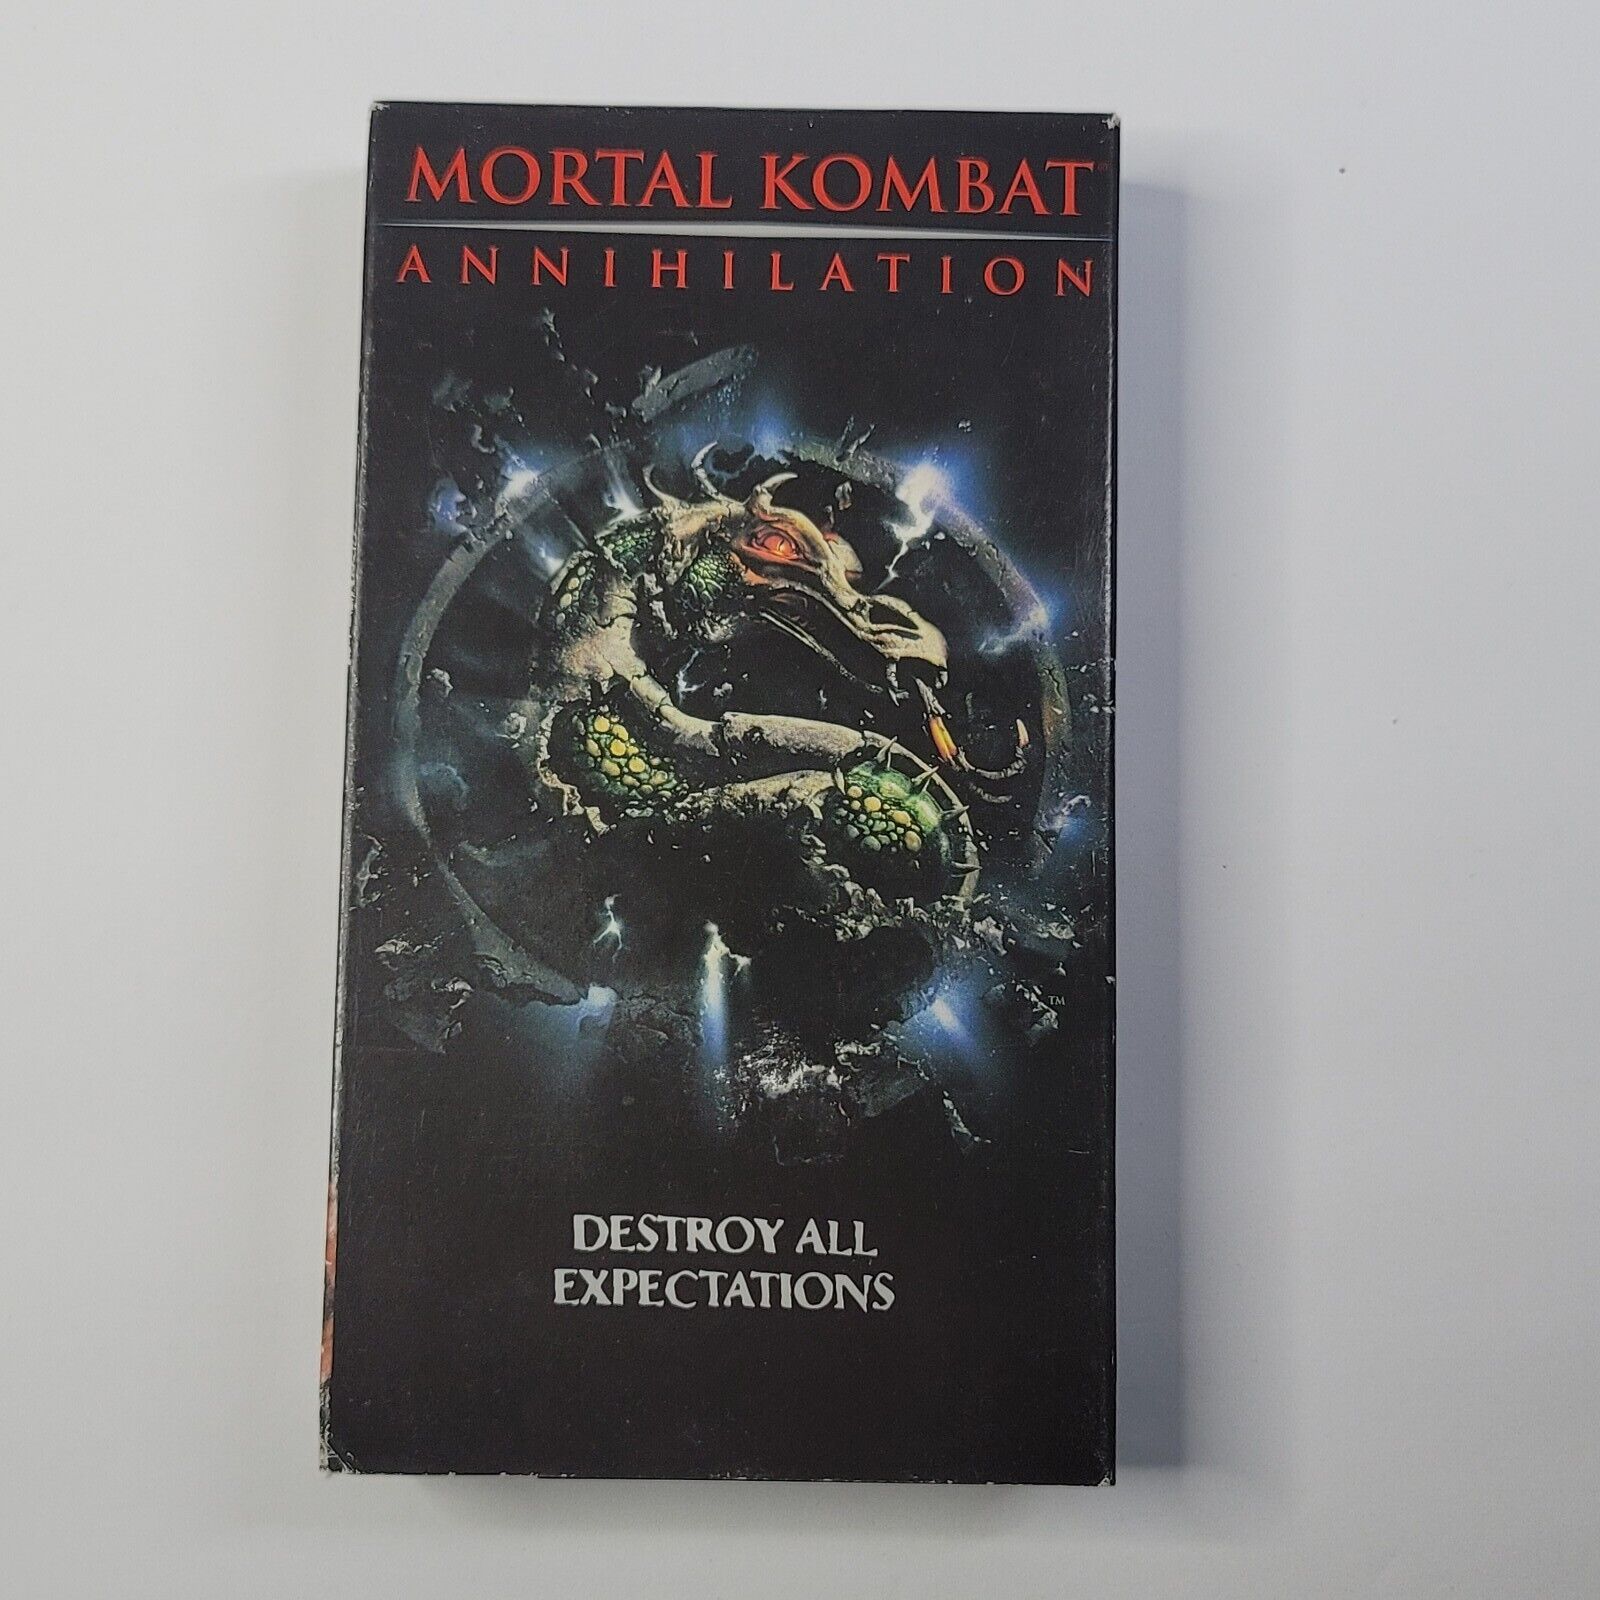 mortal kombat annihilation logo